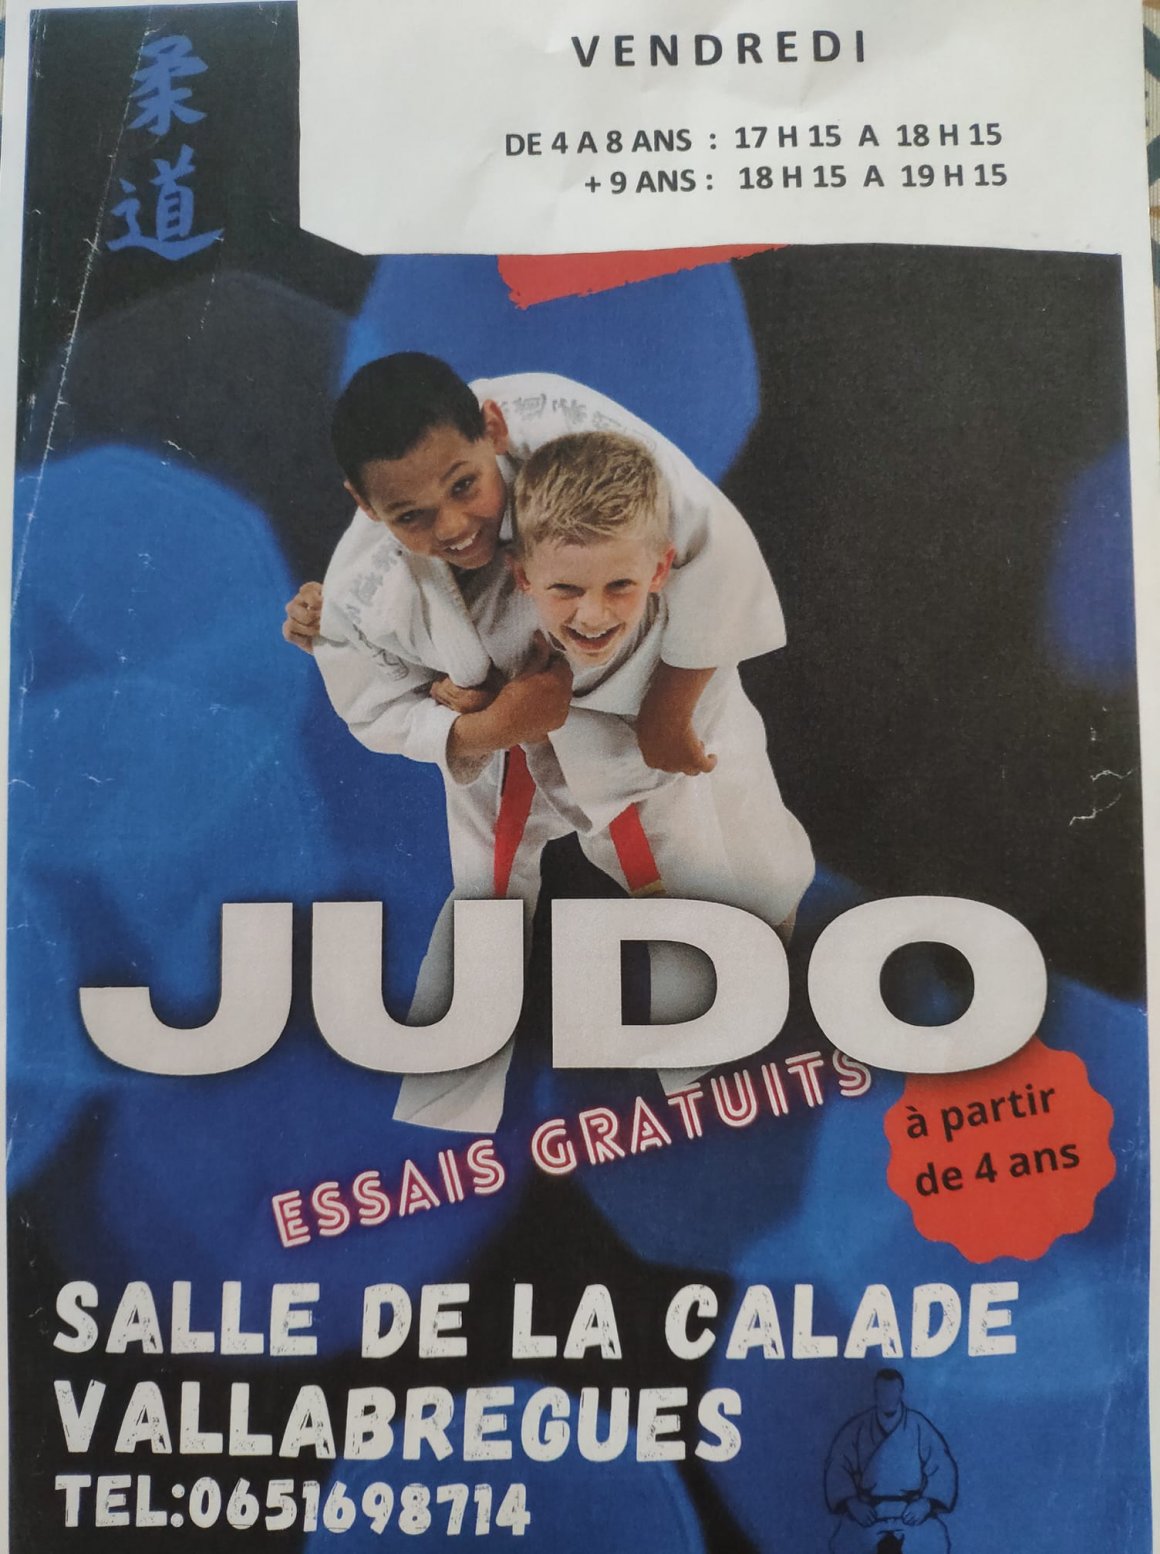 Ki-Judo